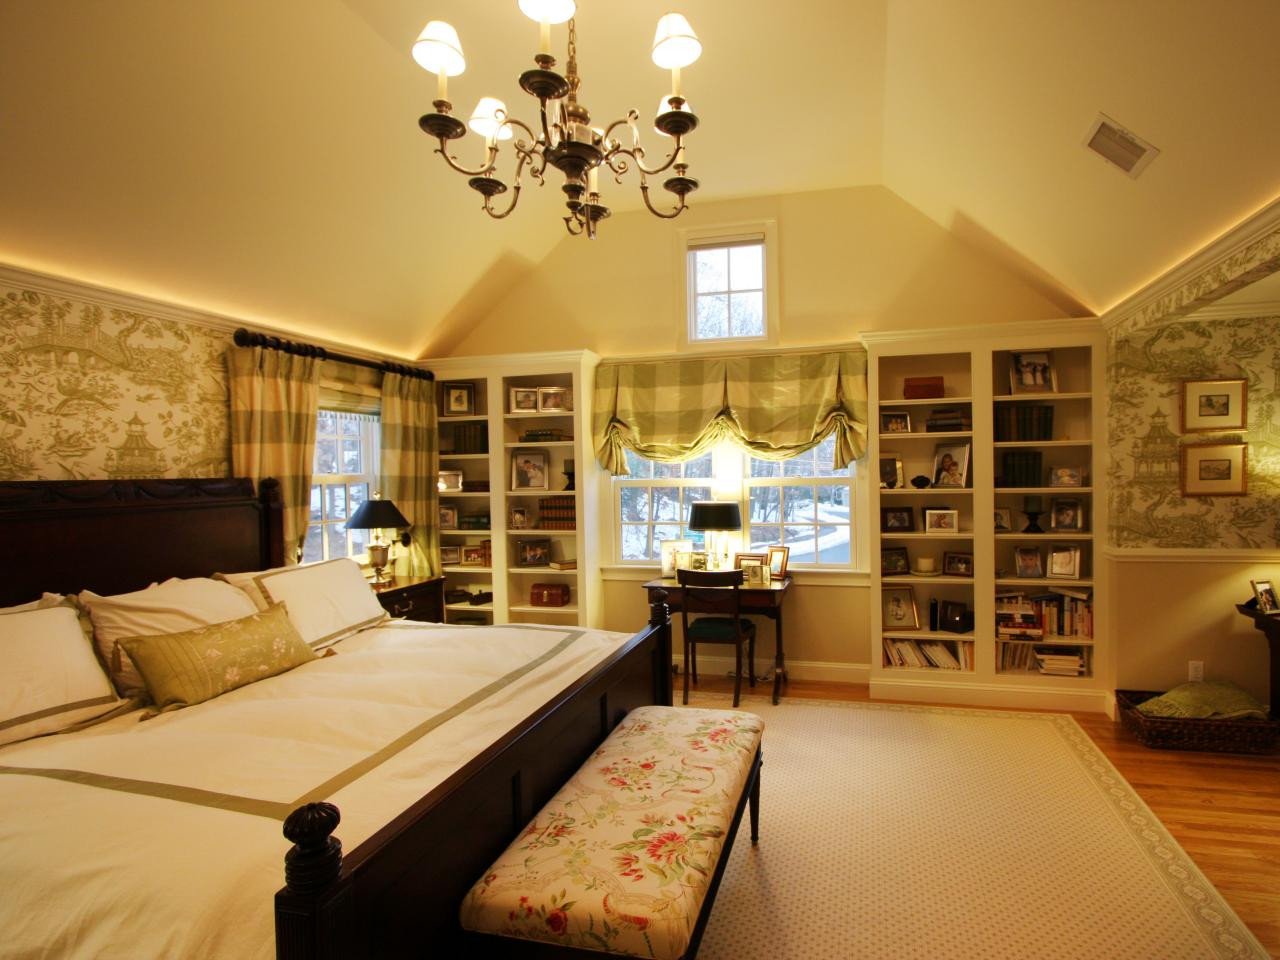 Luxury Master Bedroom Furniture Elegant Master Bedroom with King Size Bed Hgtv Style Vintage